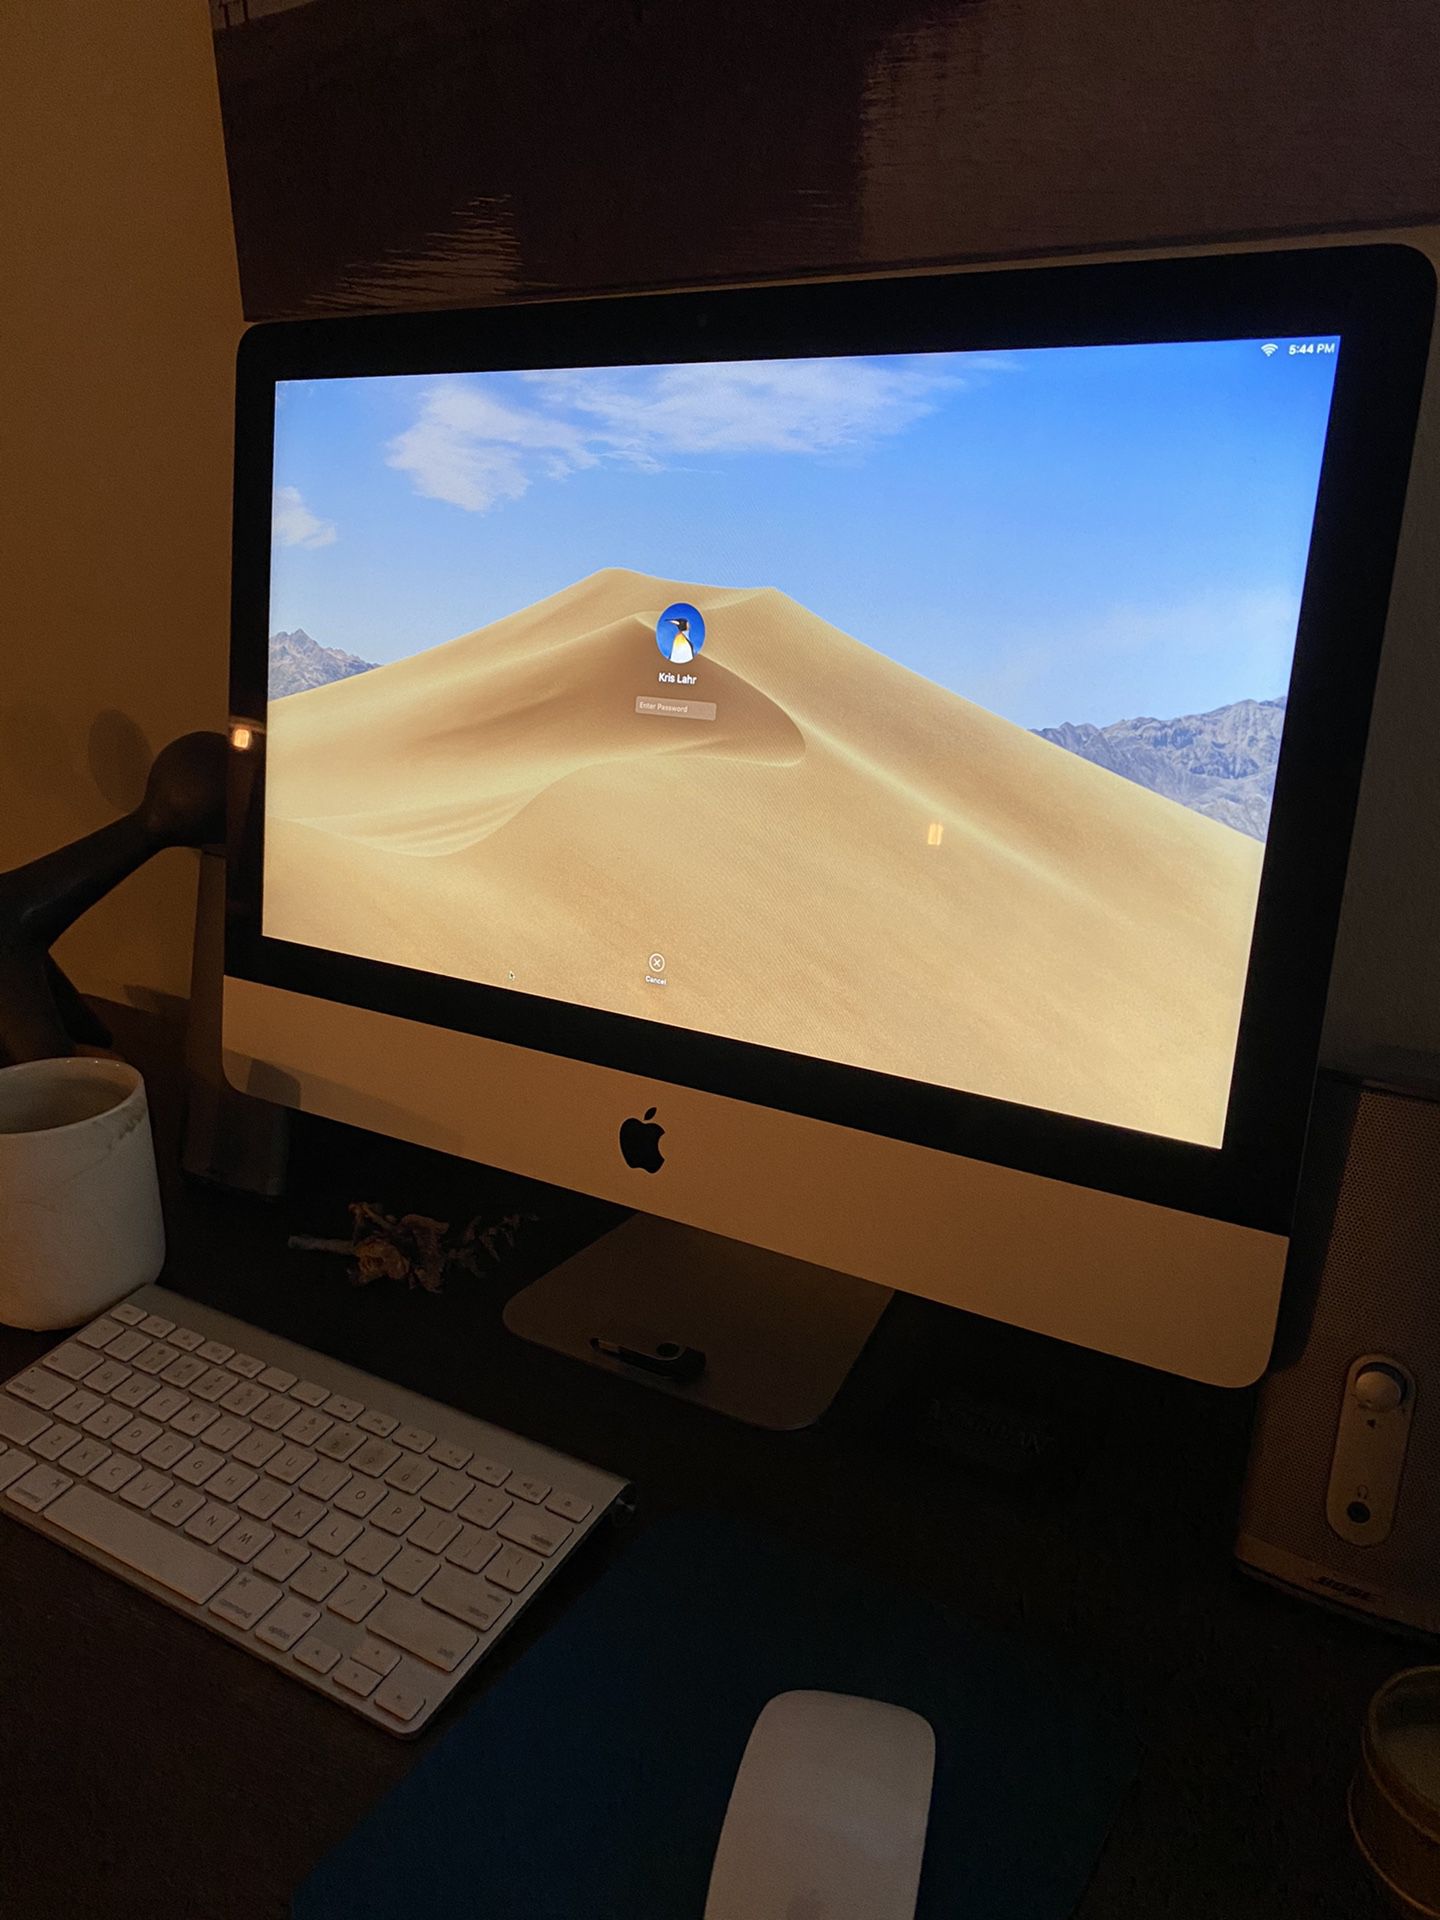 *Like New* Apple iMac 21.5 USB SuperDrive Included